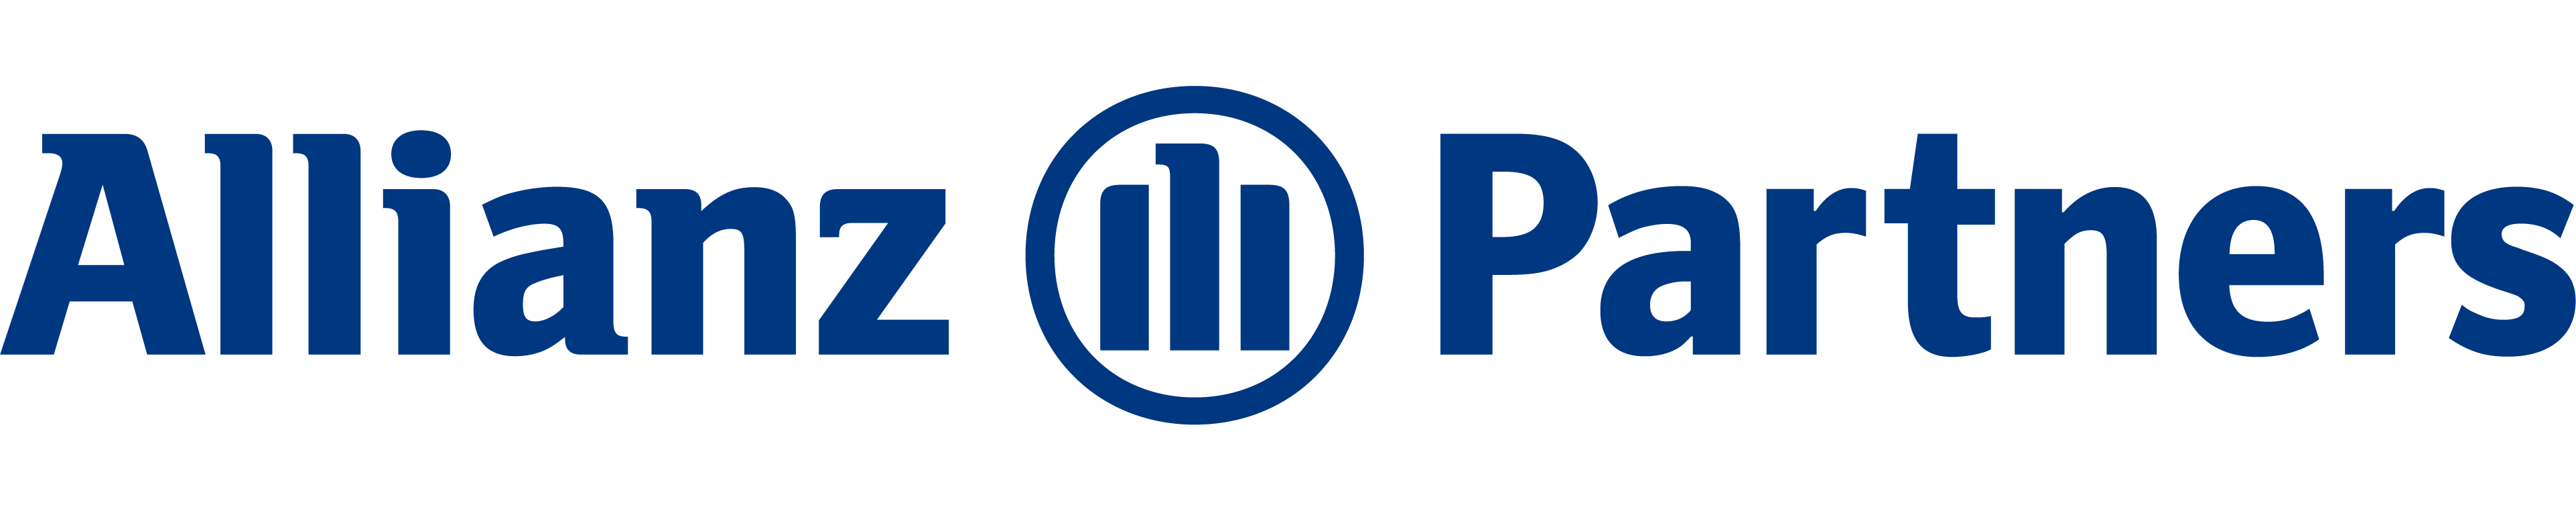 Allianz-Partners-Logo-ITA